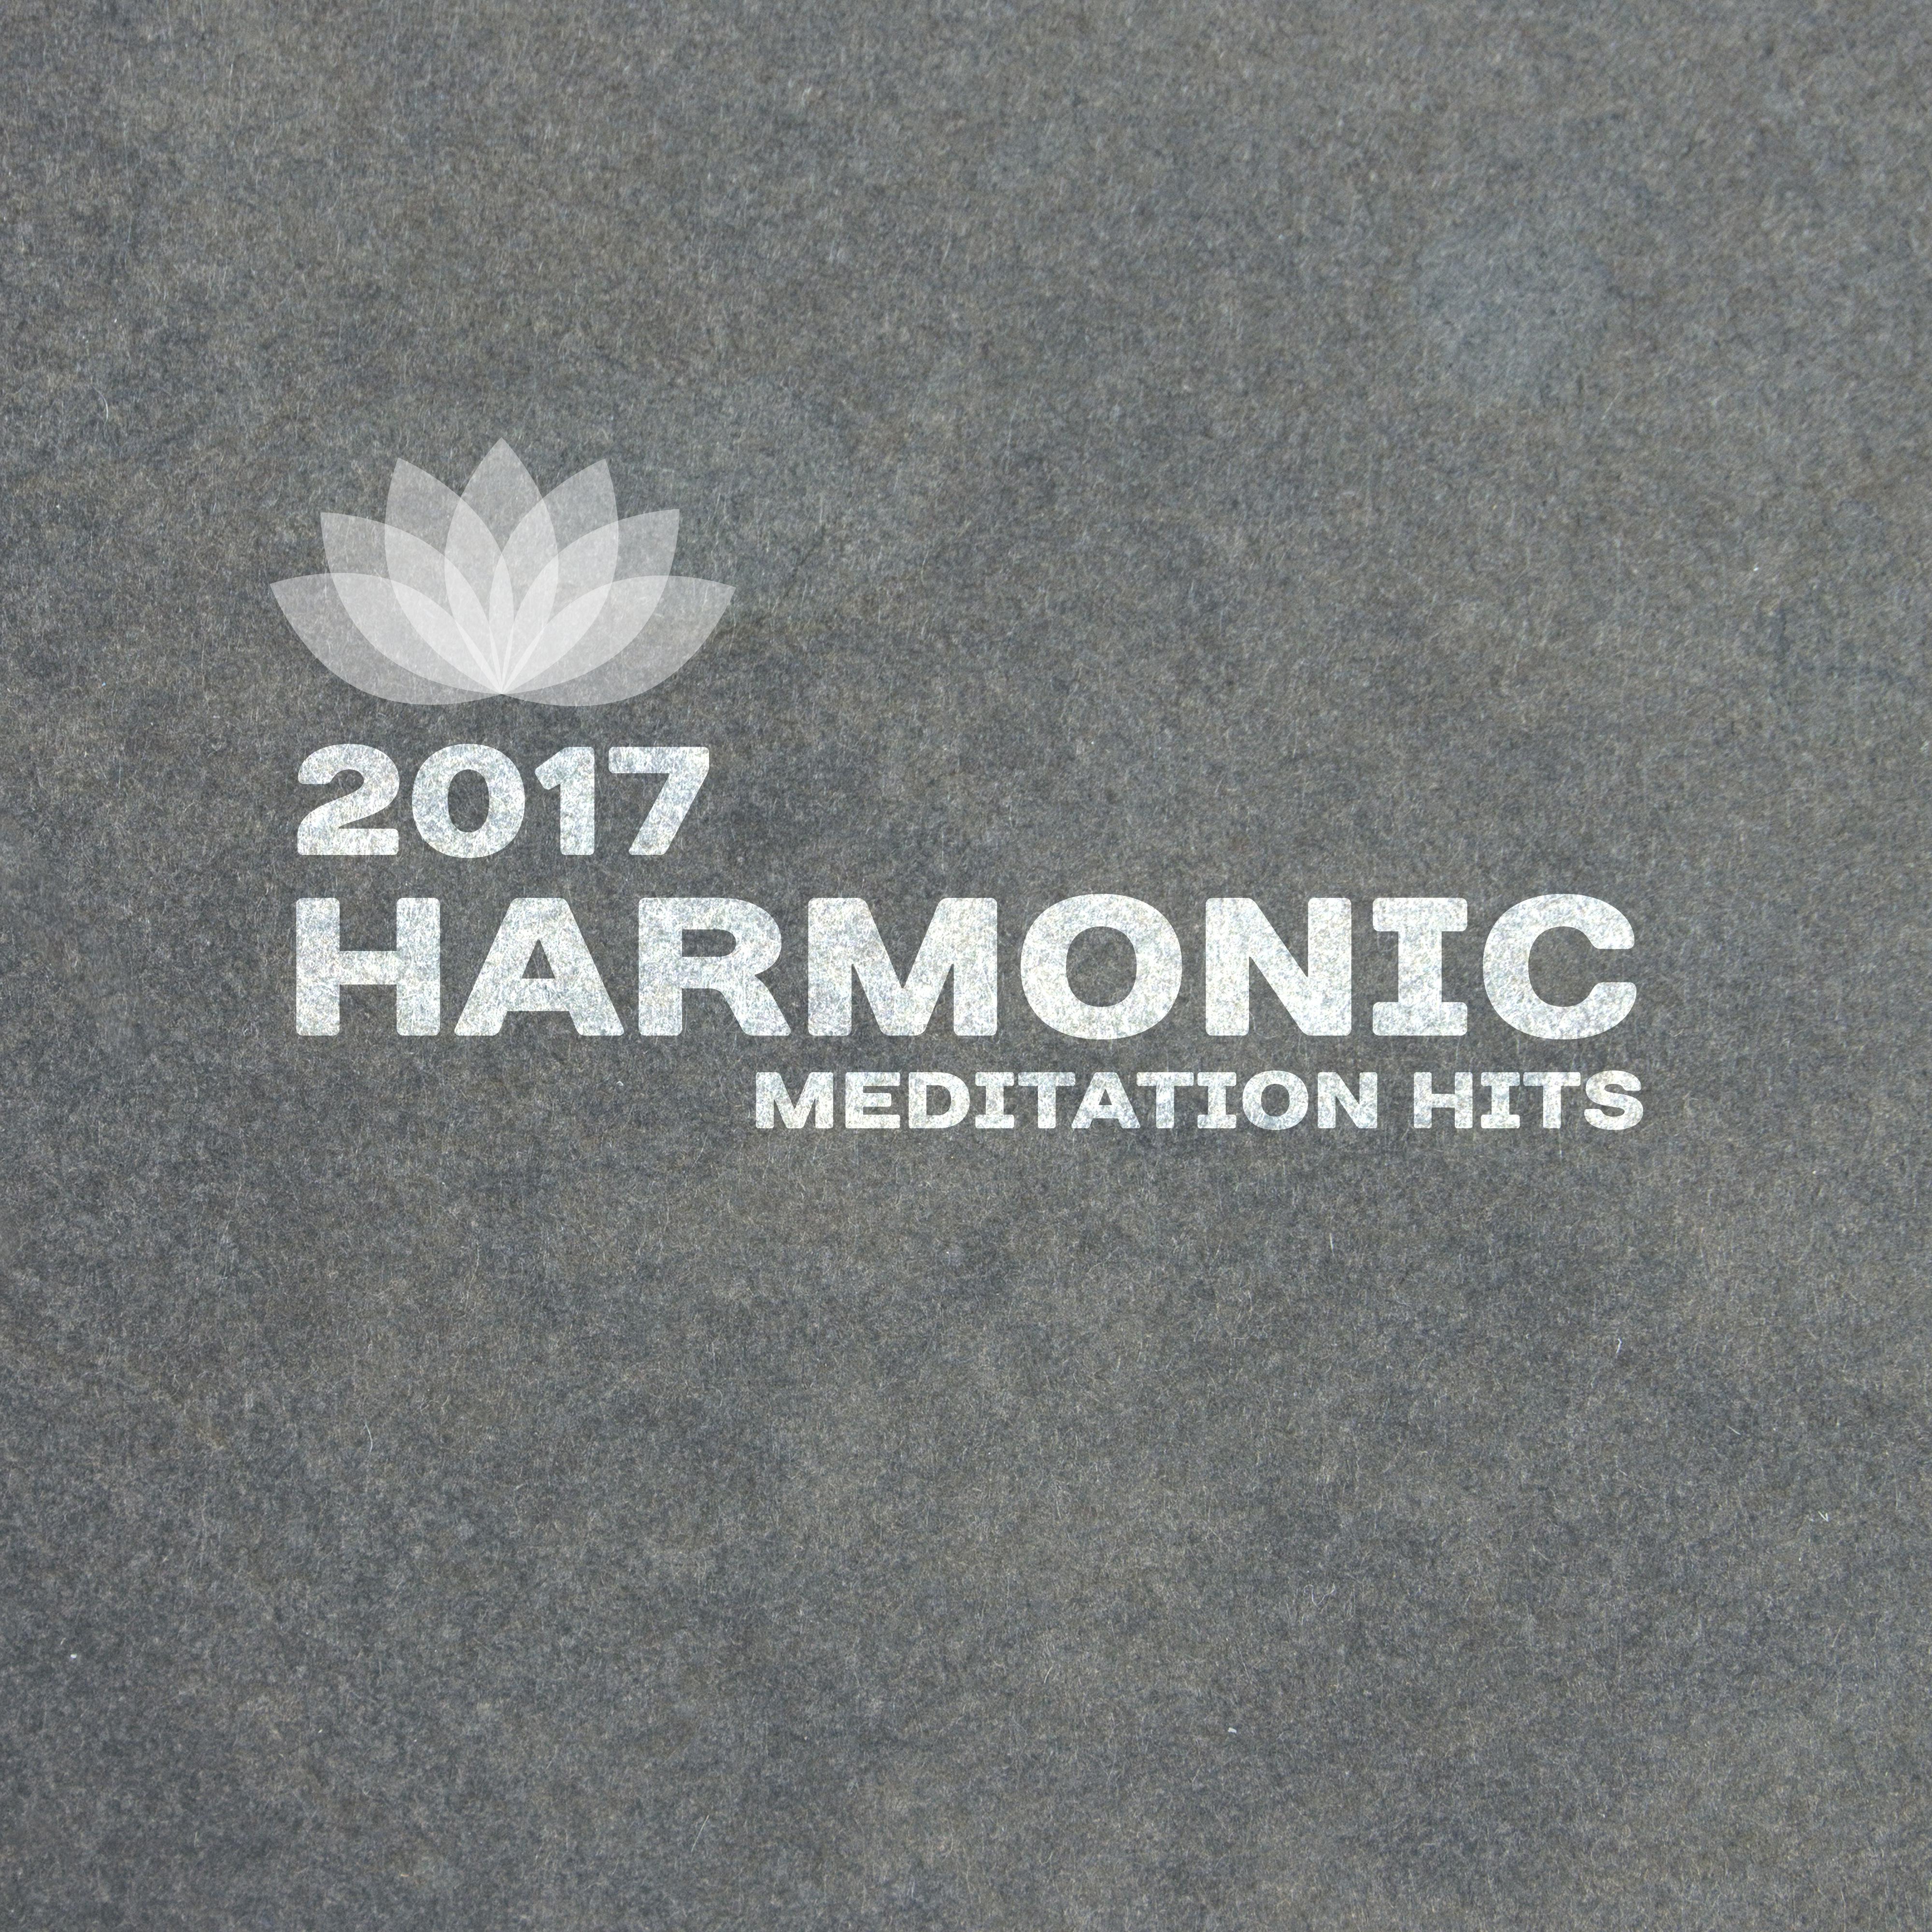 2017 Harmonic Meditation Hits